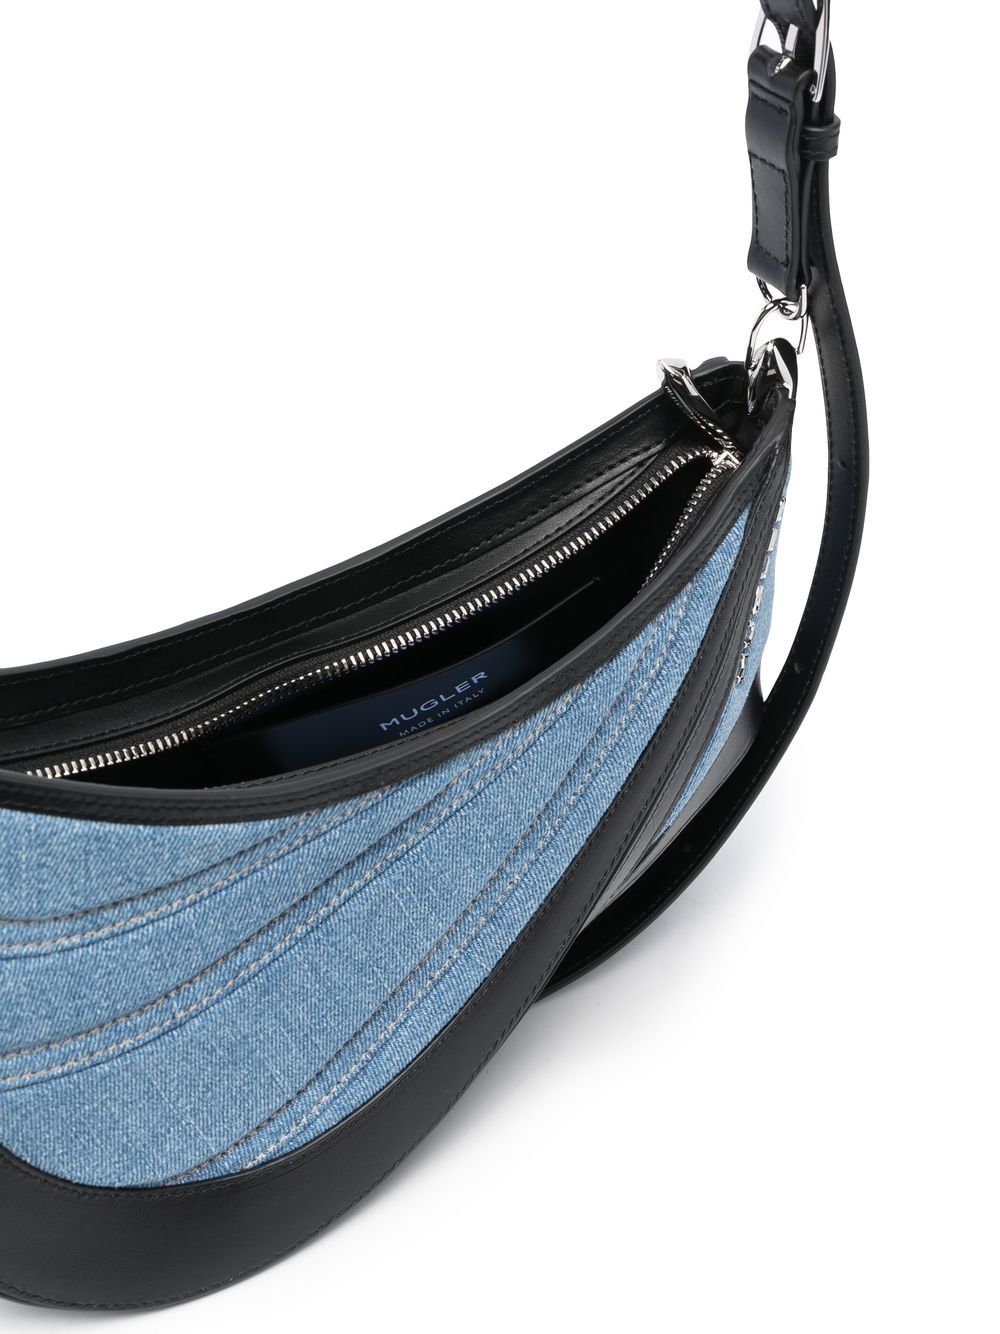 MUGLER Spiral Curve 01 Denim Crossbody Handbag for Women - FW23 Collection